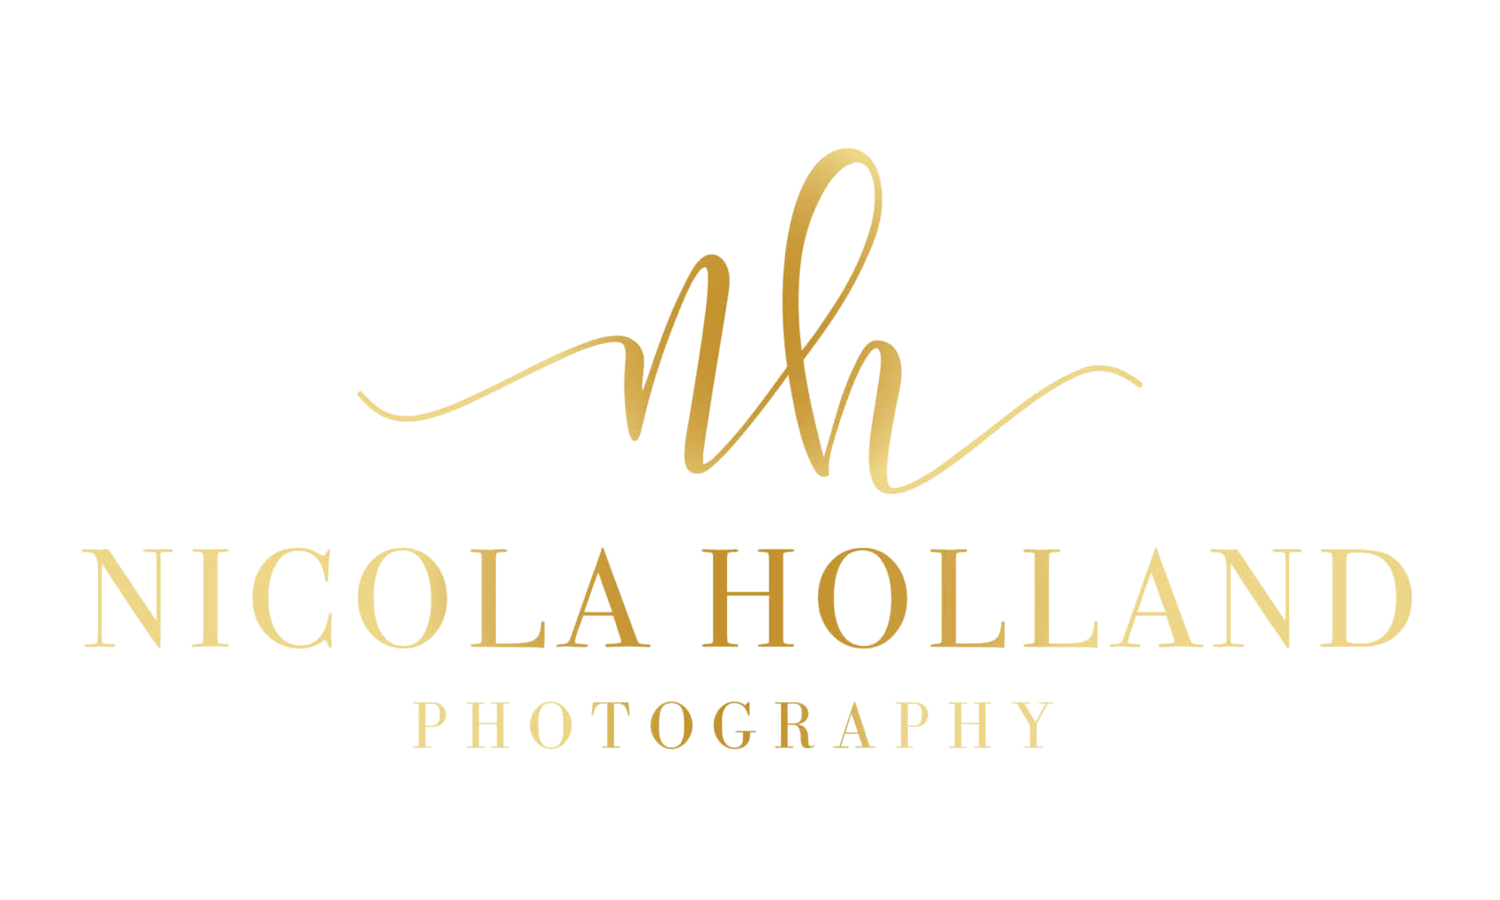 Nicola Holland Photography